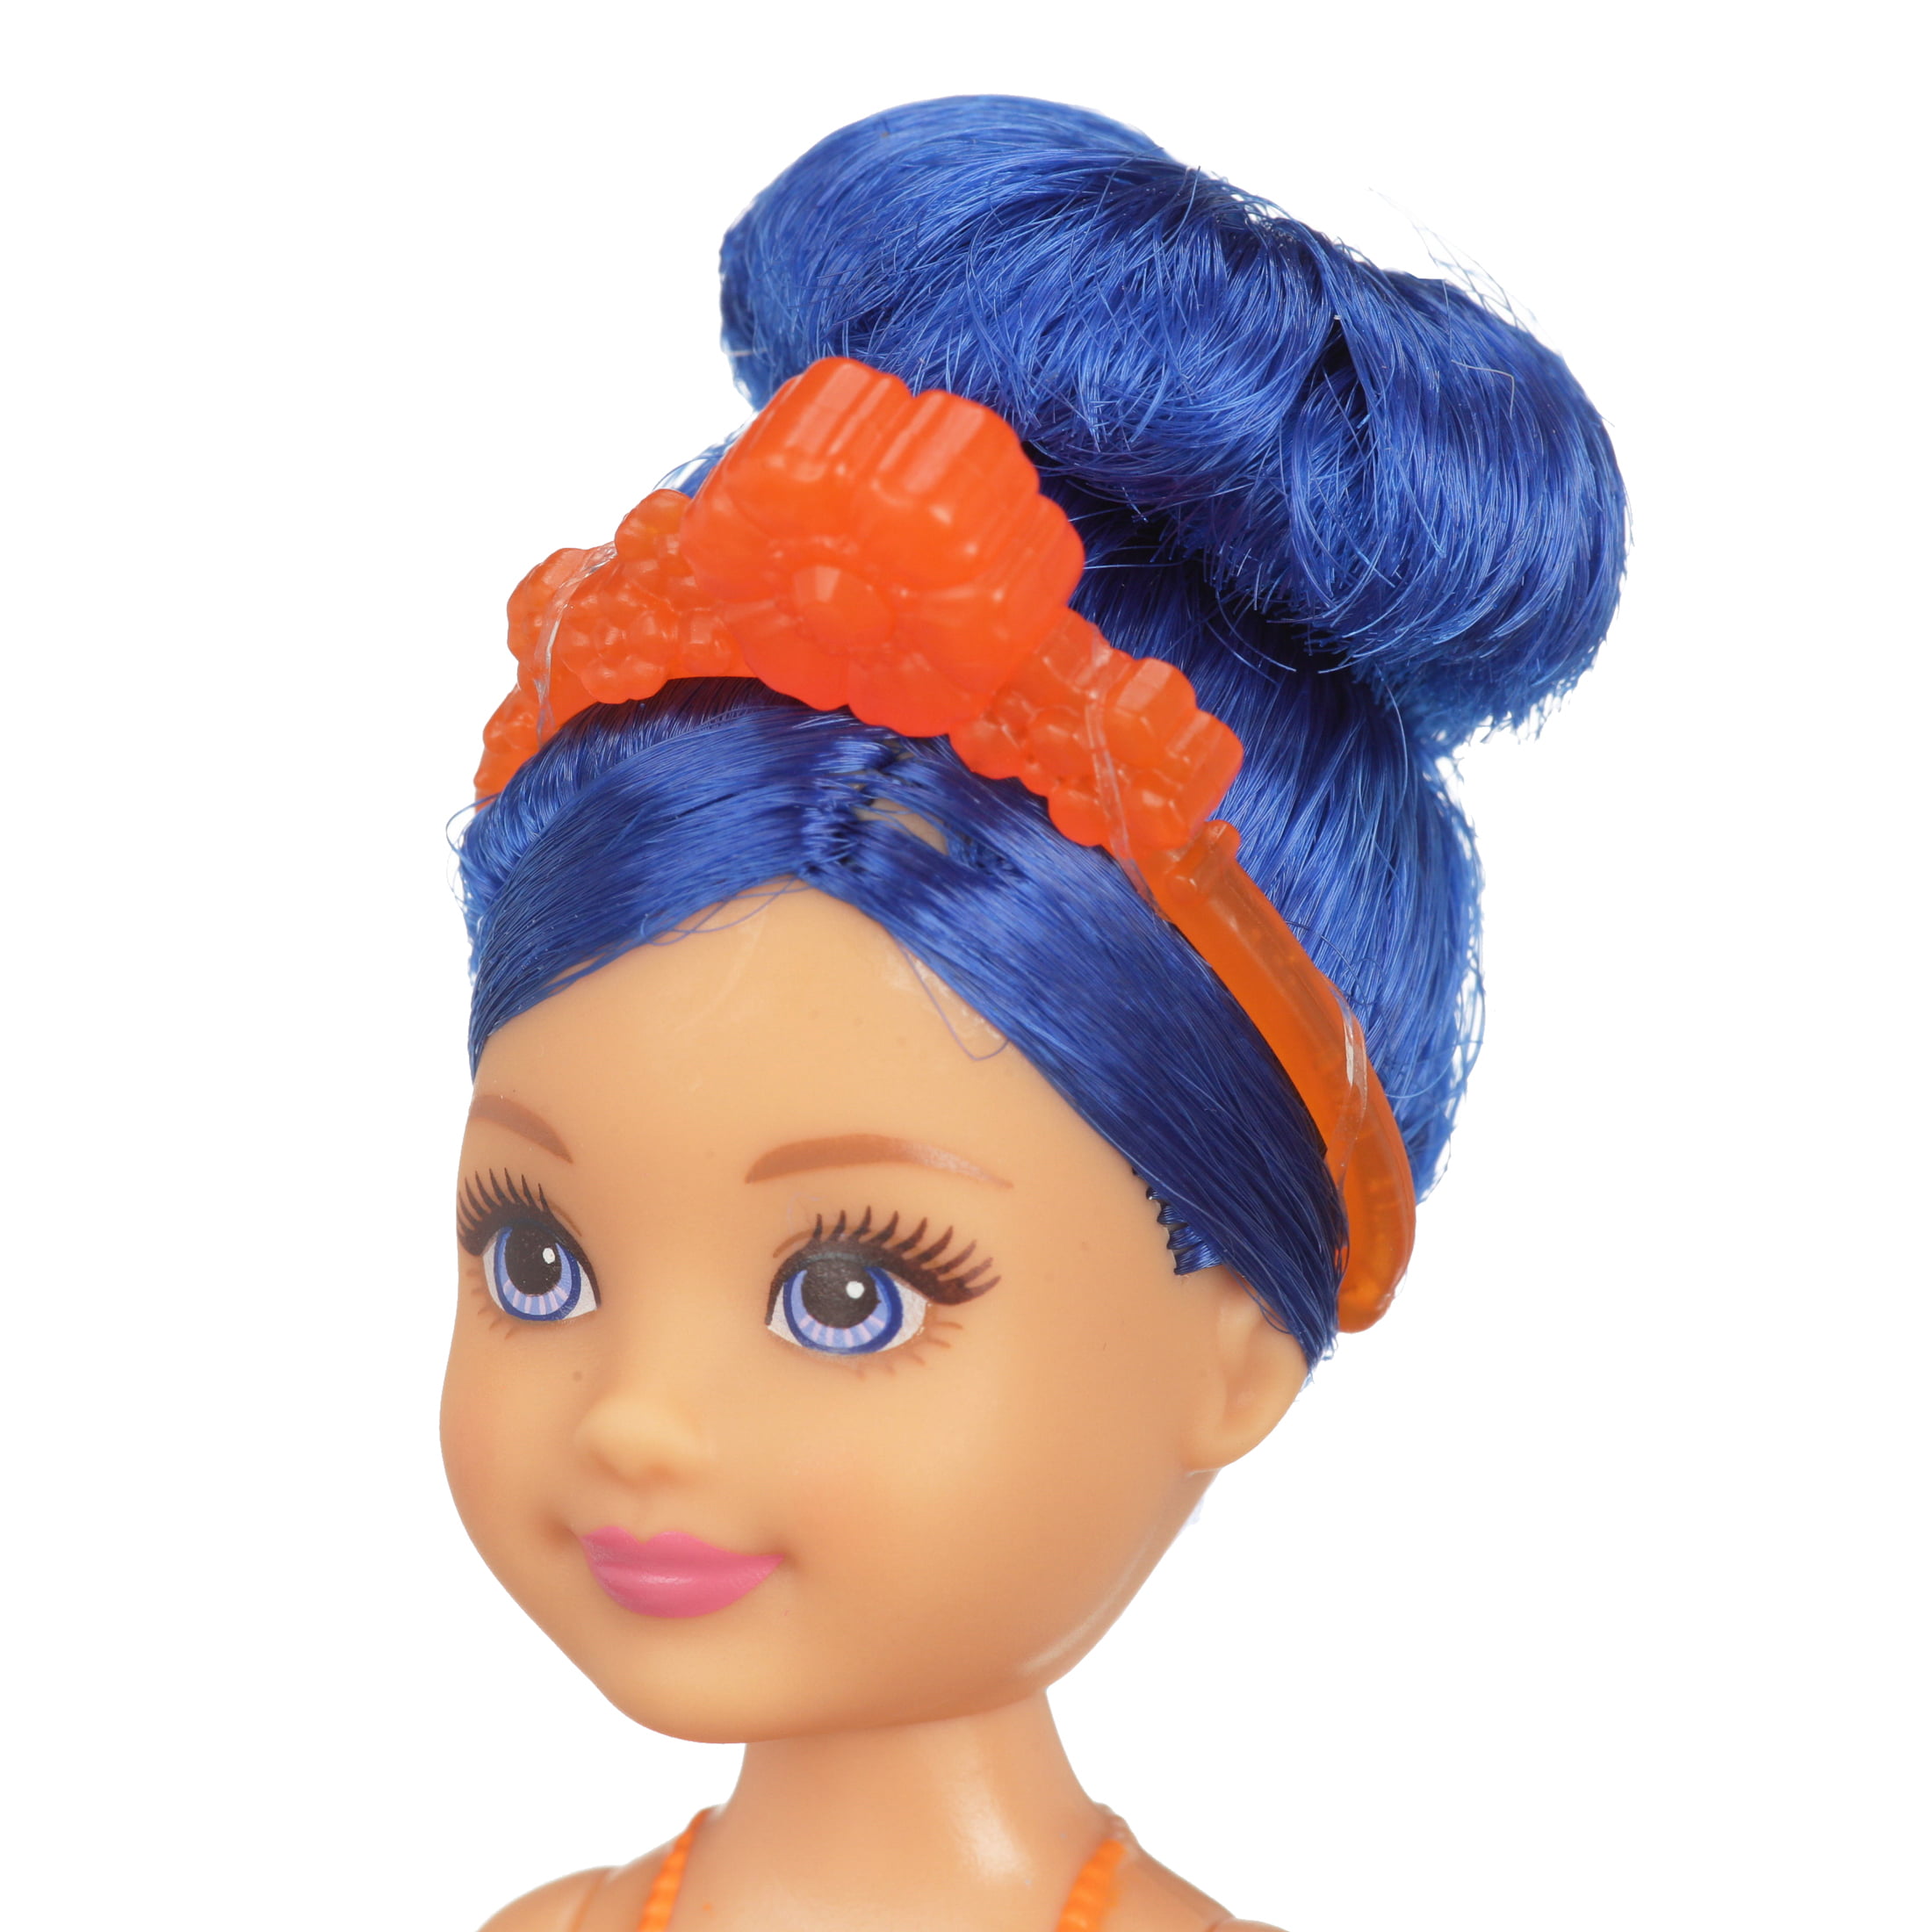 Barbie Dreamtopia Rainbow Cove Blue Doll Walmart.com